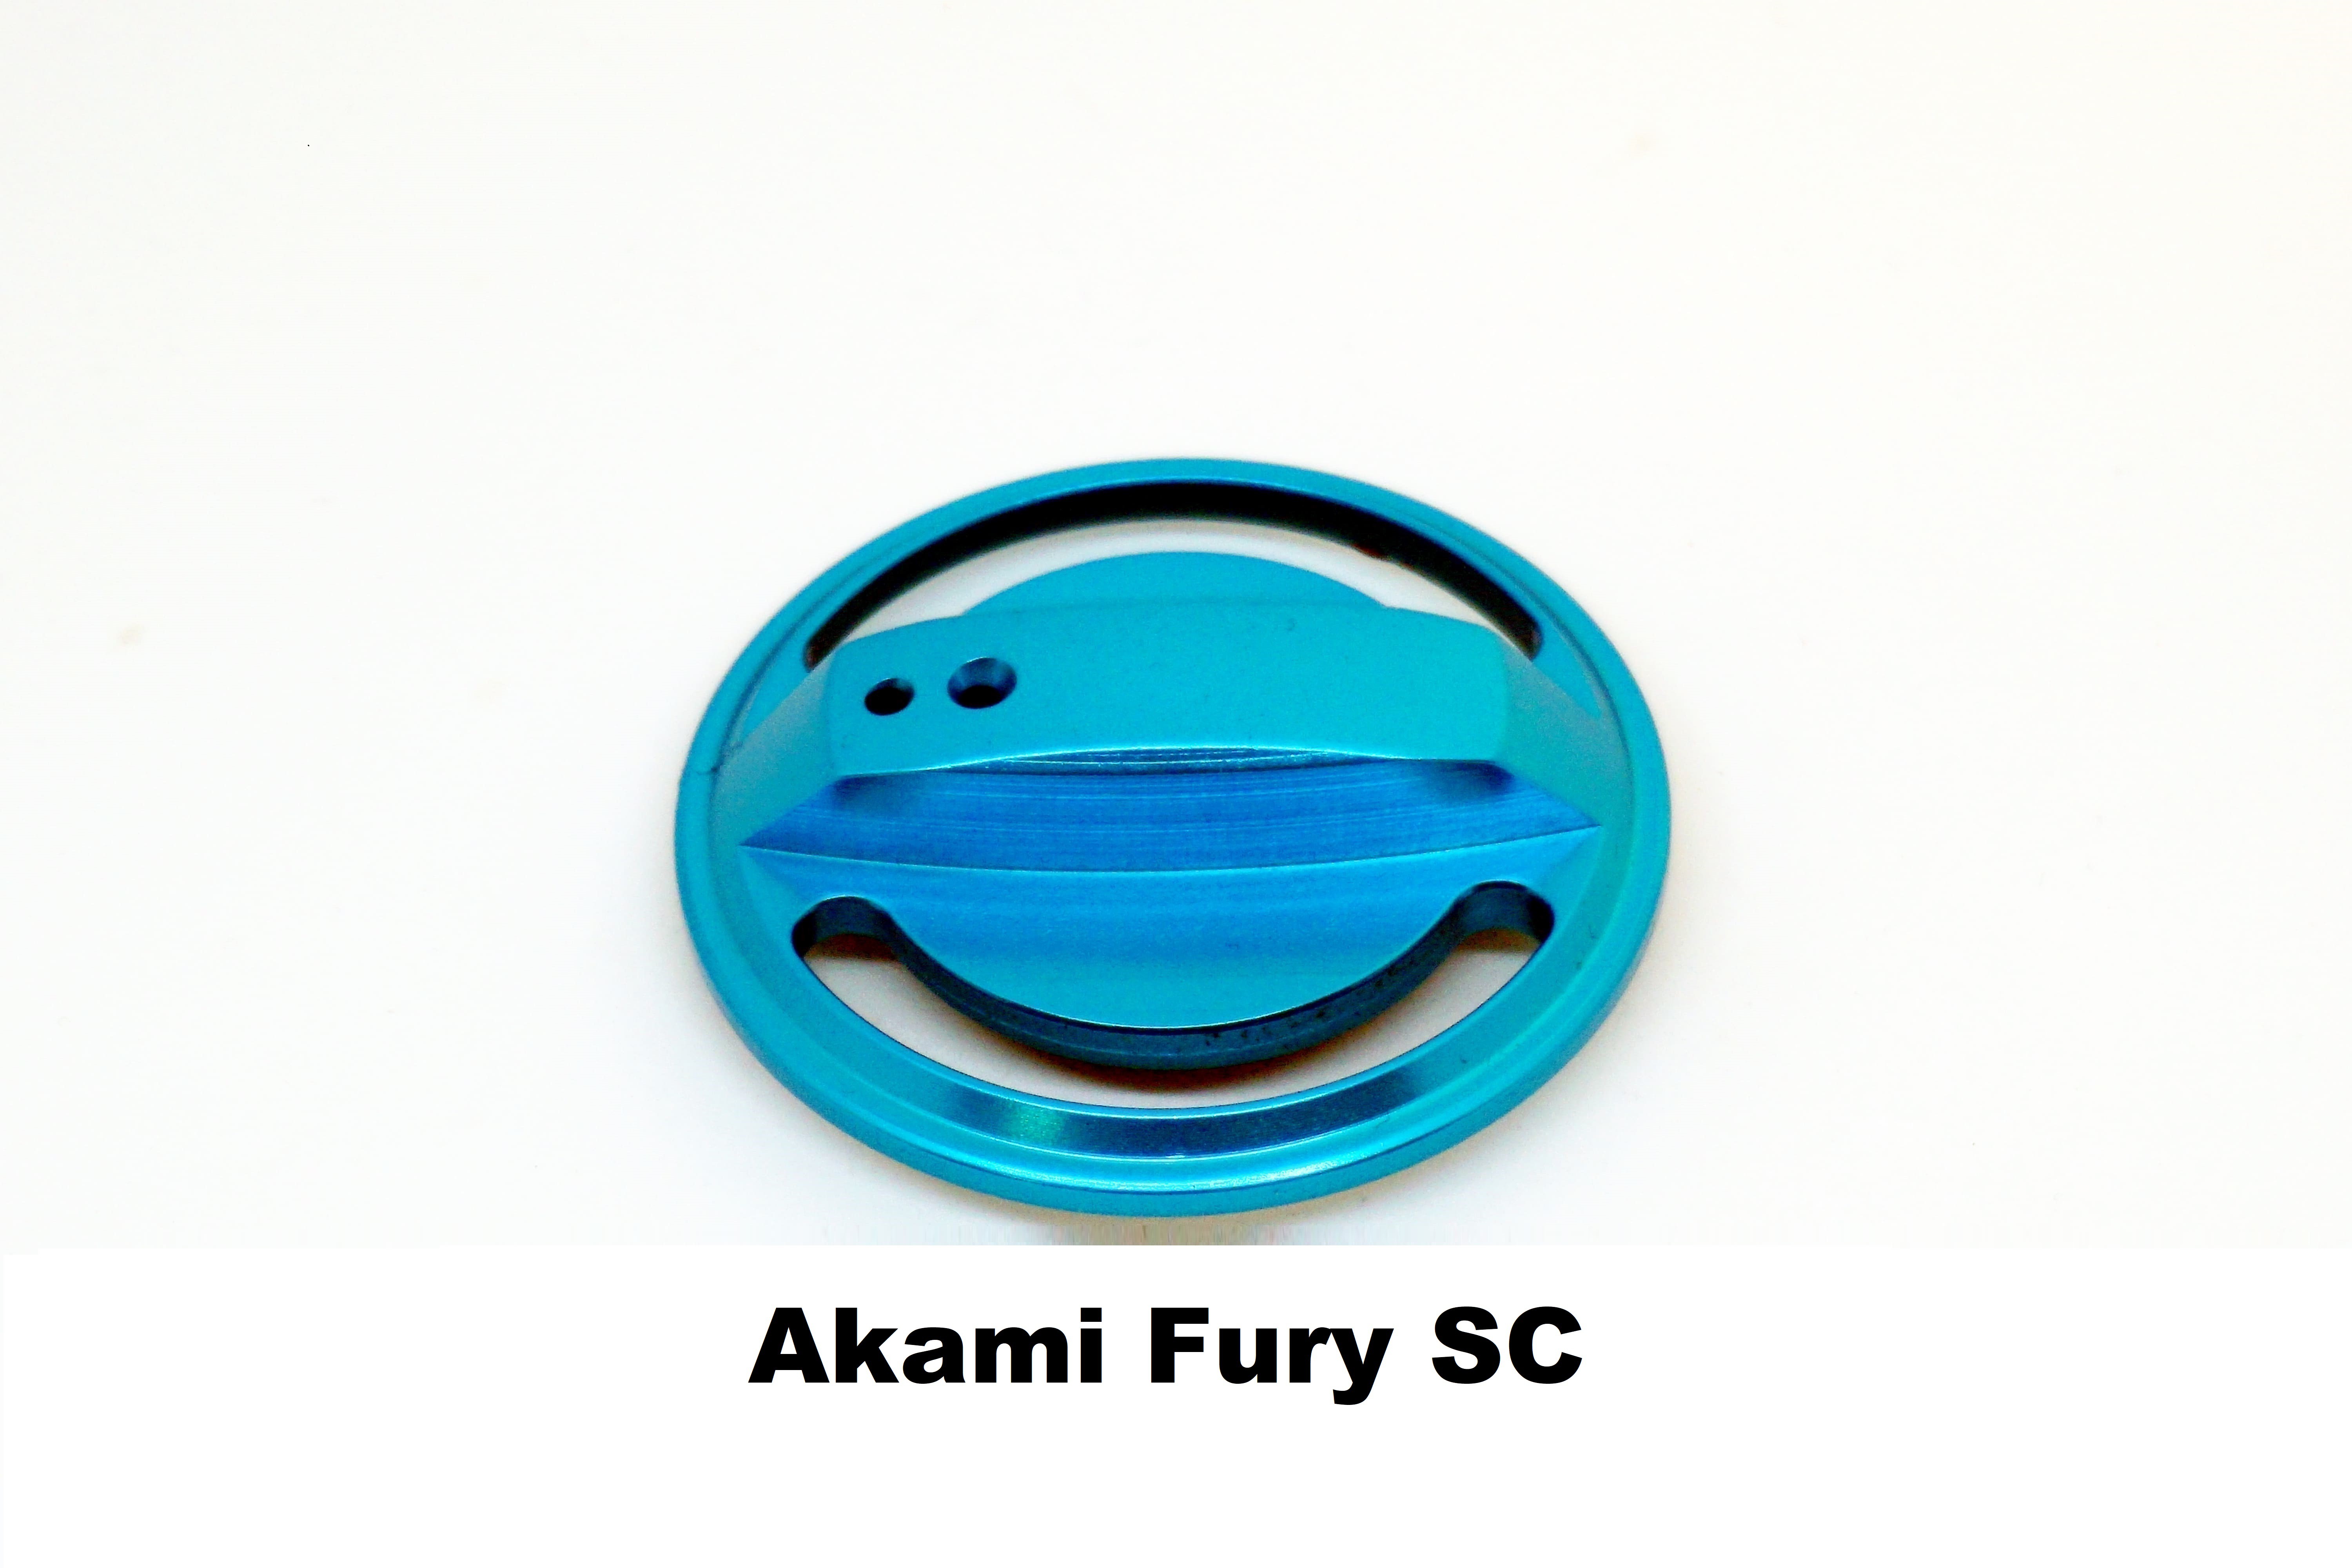 Drag Knob for Akami Fury SC